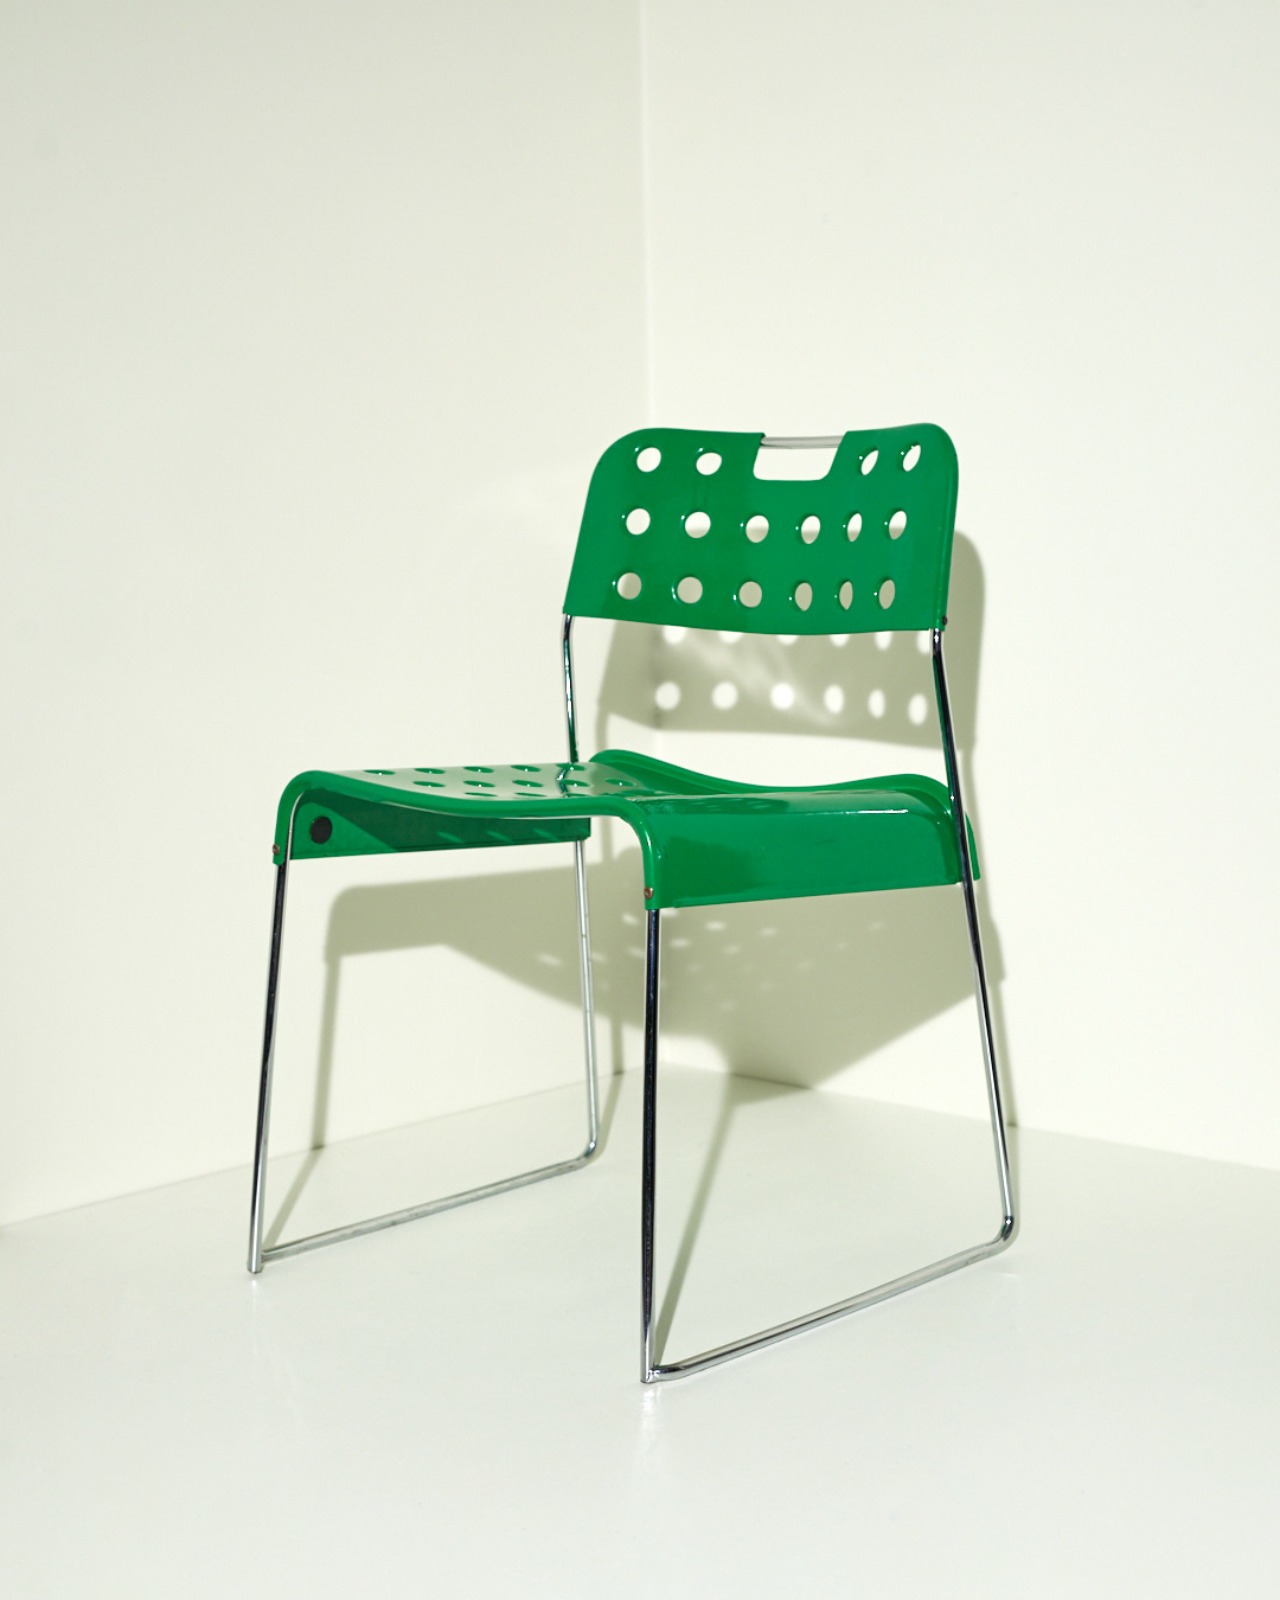 #11383 / Modern Metal Chairs Omstak by Rodney Kinsman for Bieffeplast 70s (green)